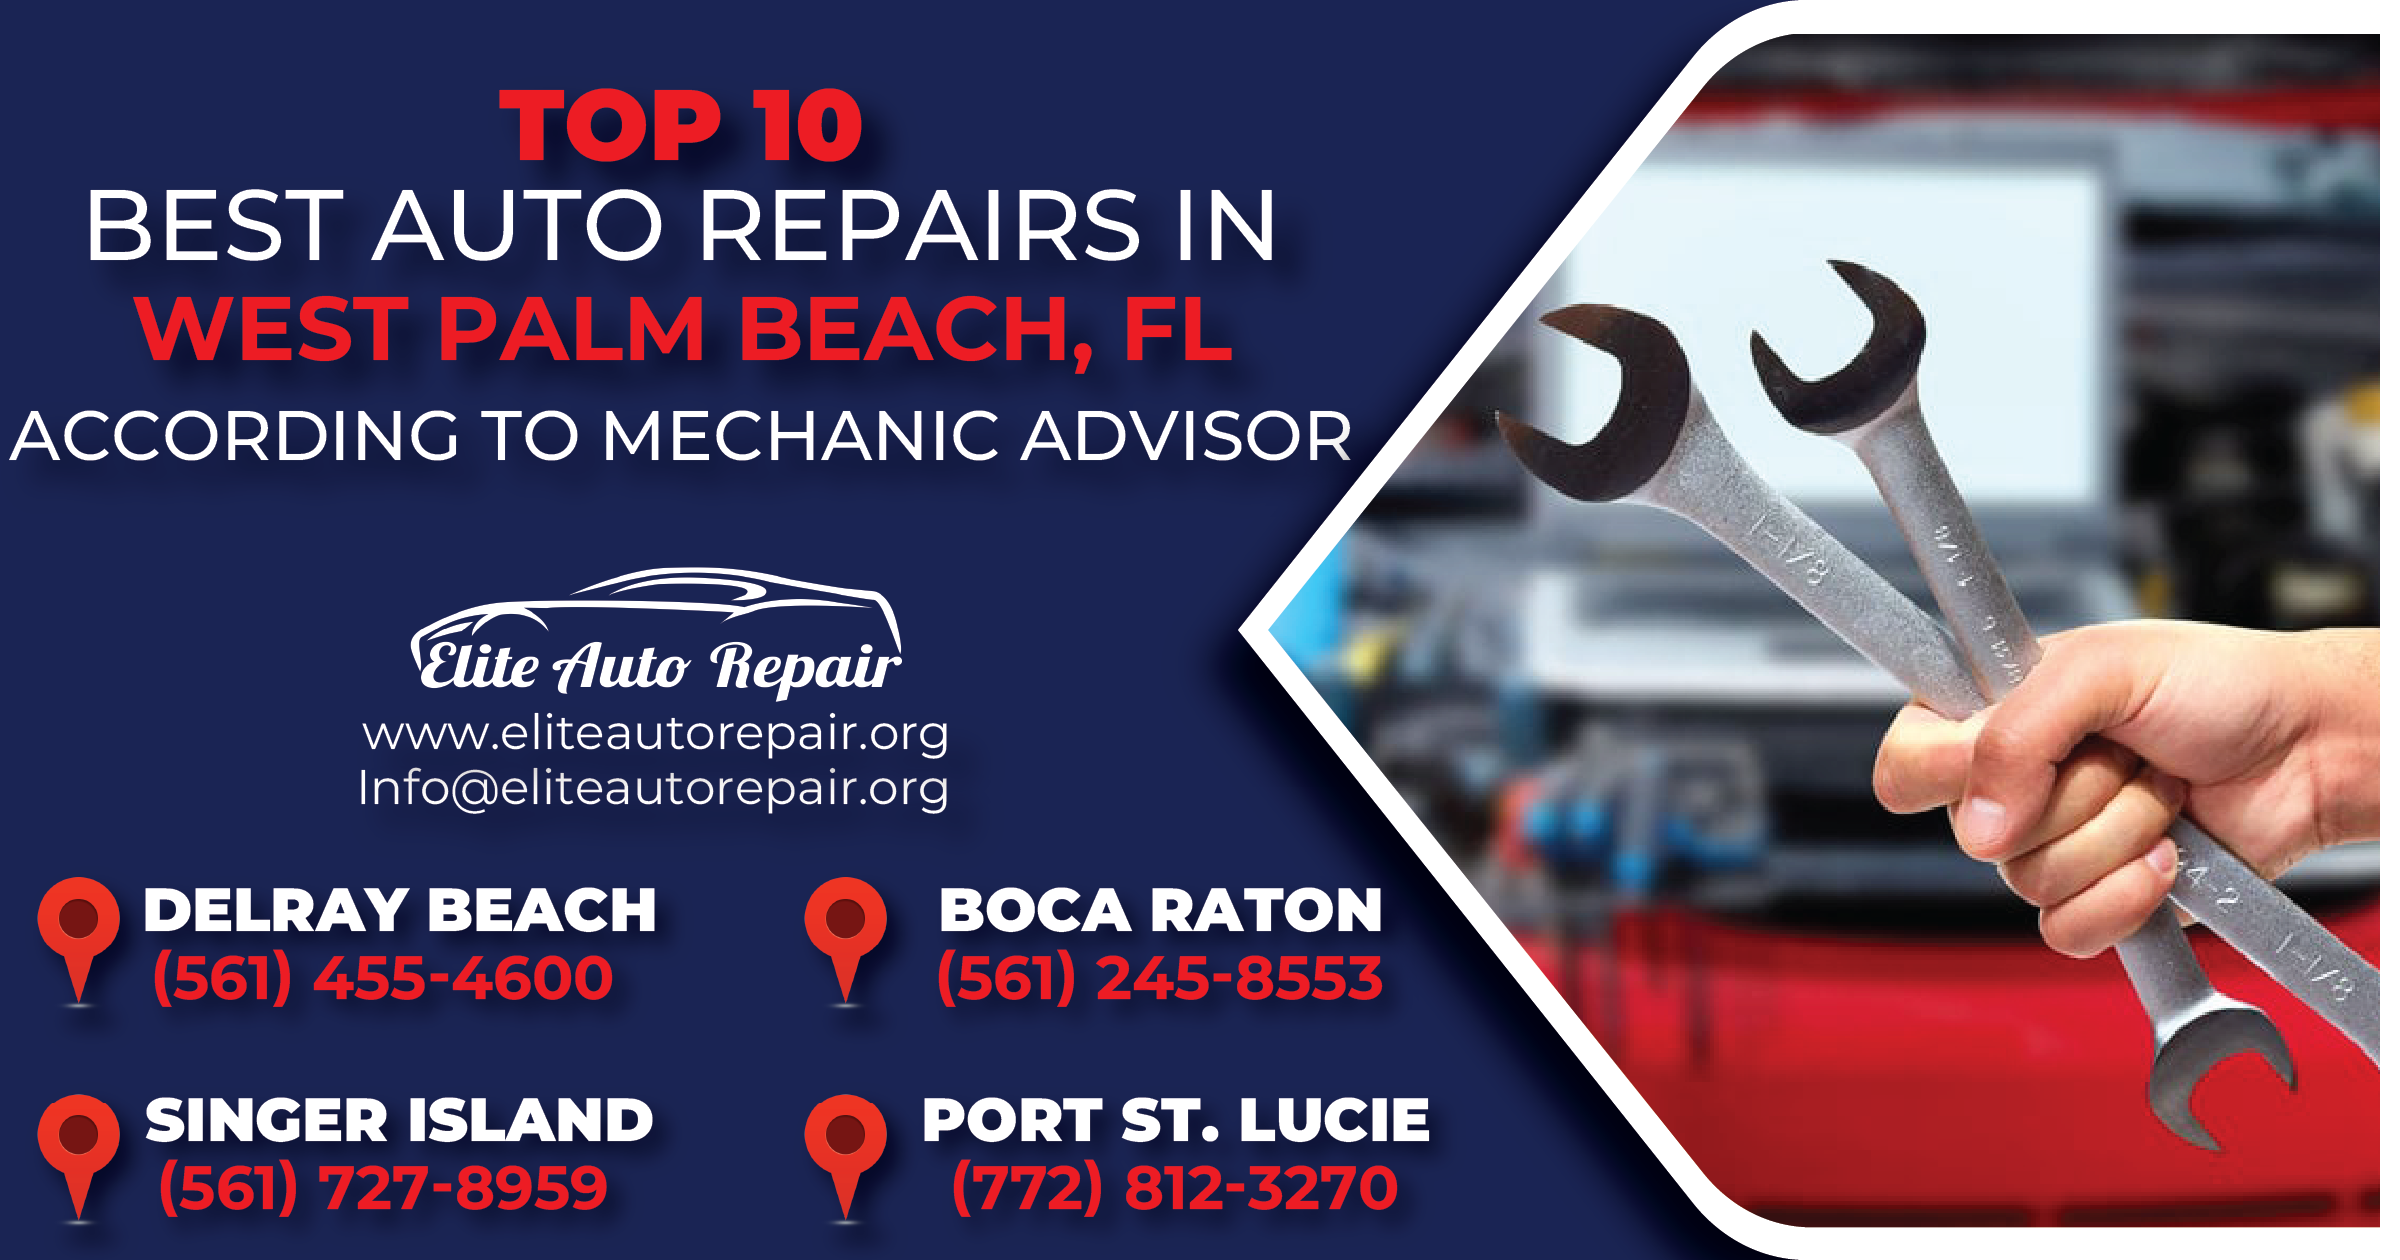 Top 10 Best Auto Repairs on West Palm Beach Florida According to Mechanic Advisor